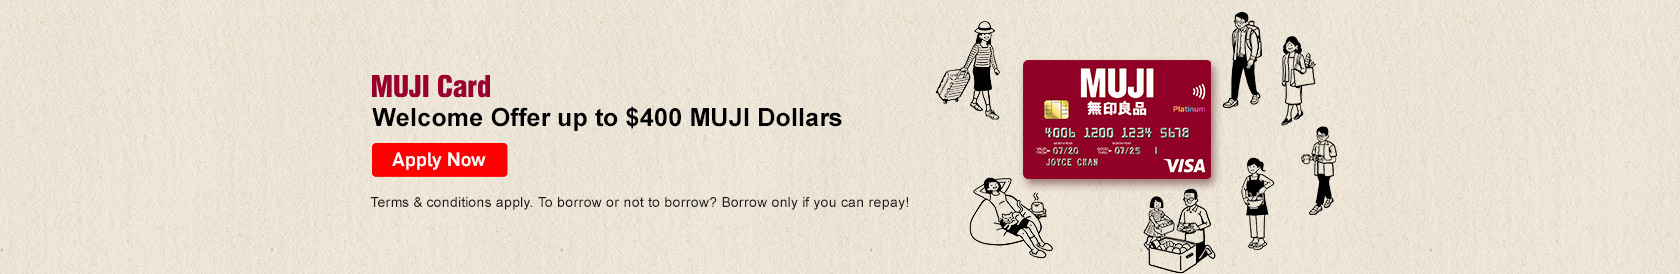 MUJI Card Welcome offer $200 MUJI Dollars